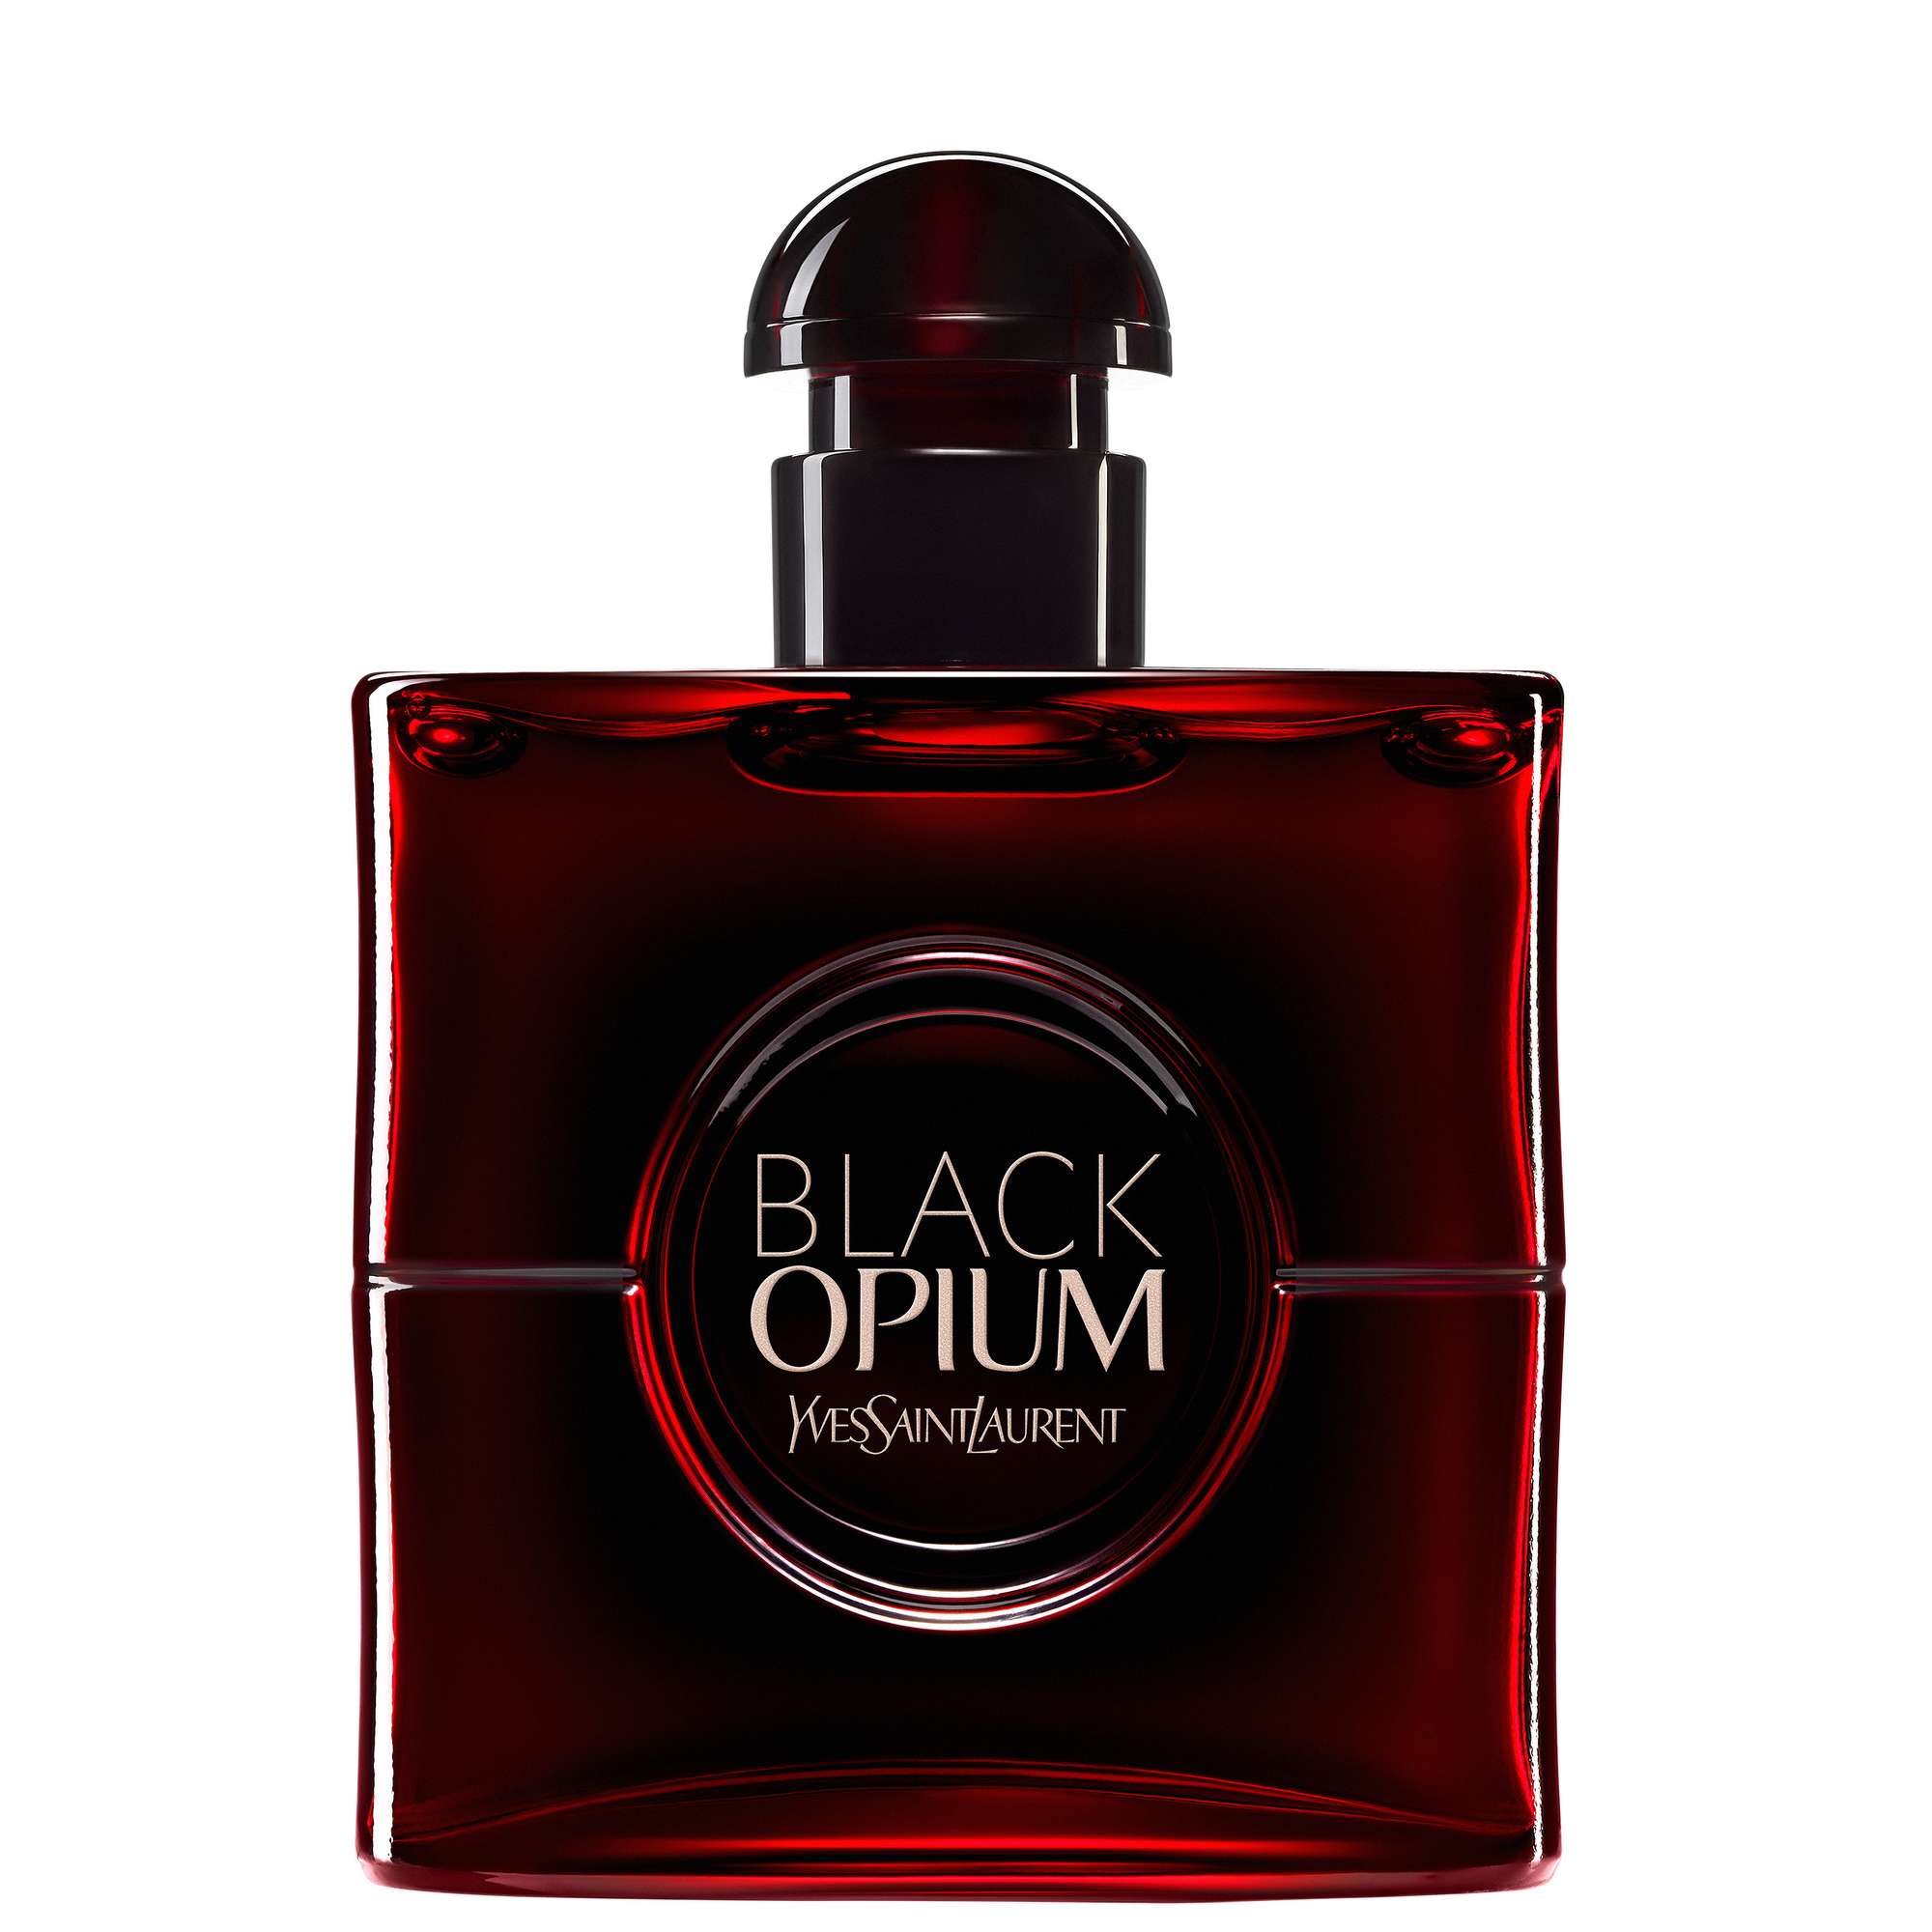 Photos - Women's Fragrance Yves Saint Laurent Black Opium Over Red Eau de Parfum Spray 50ml 